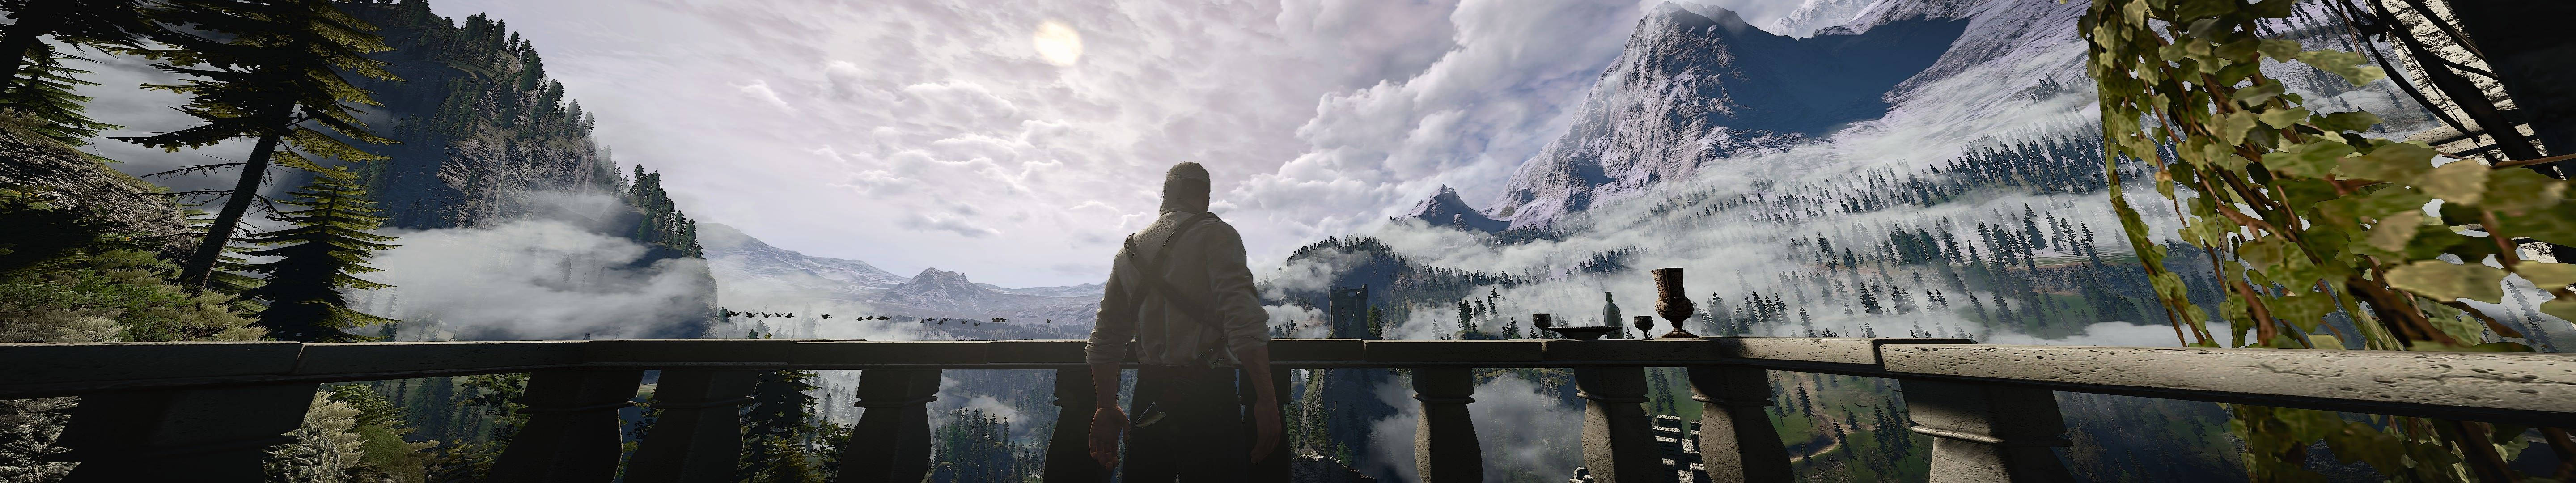 Witcher 3 Geralt Balcony View Background